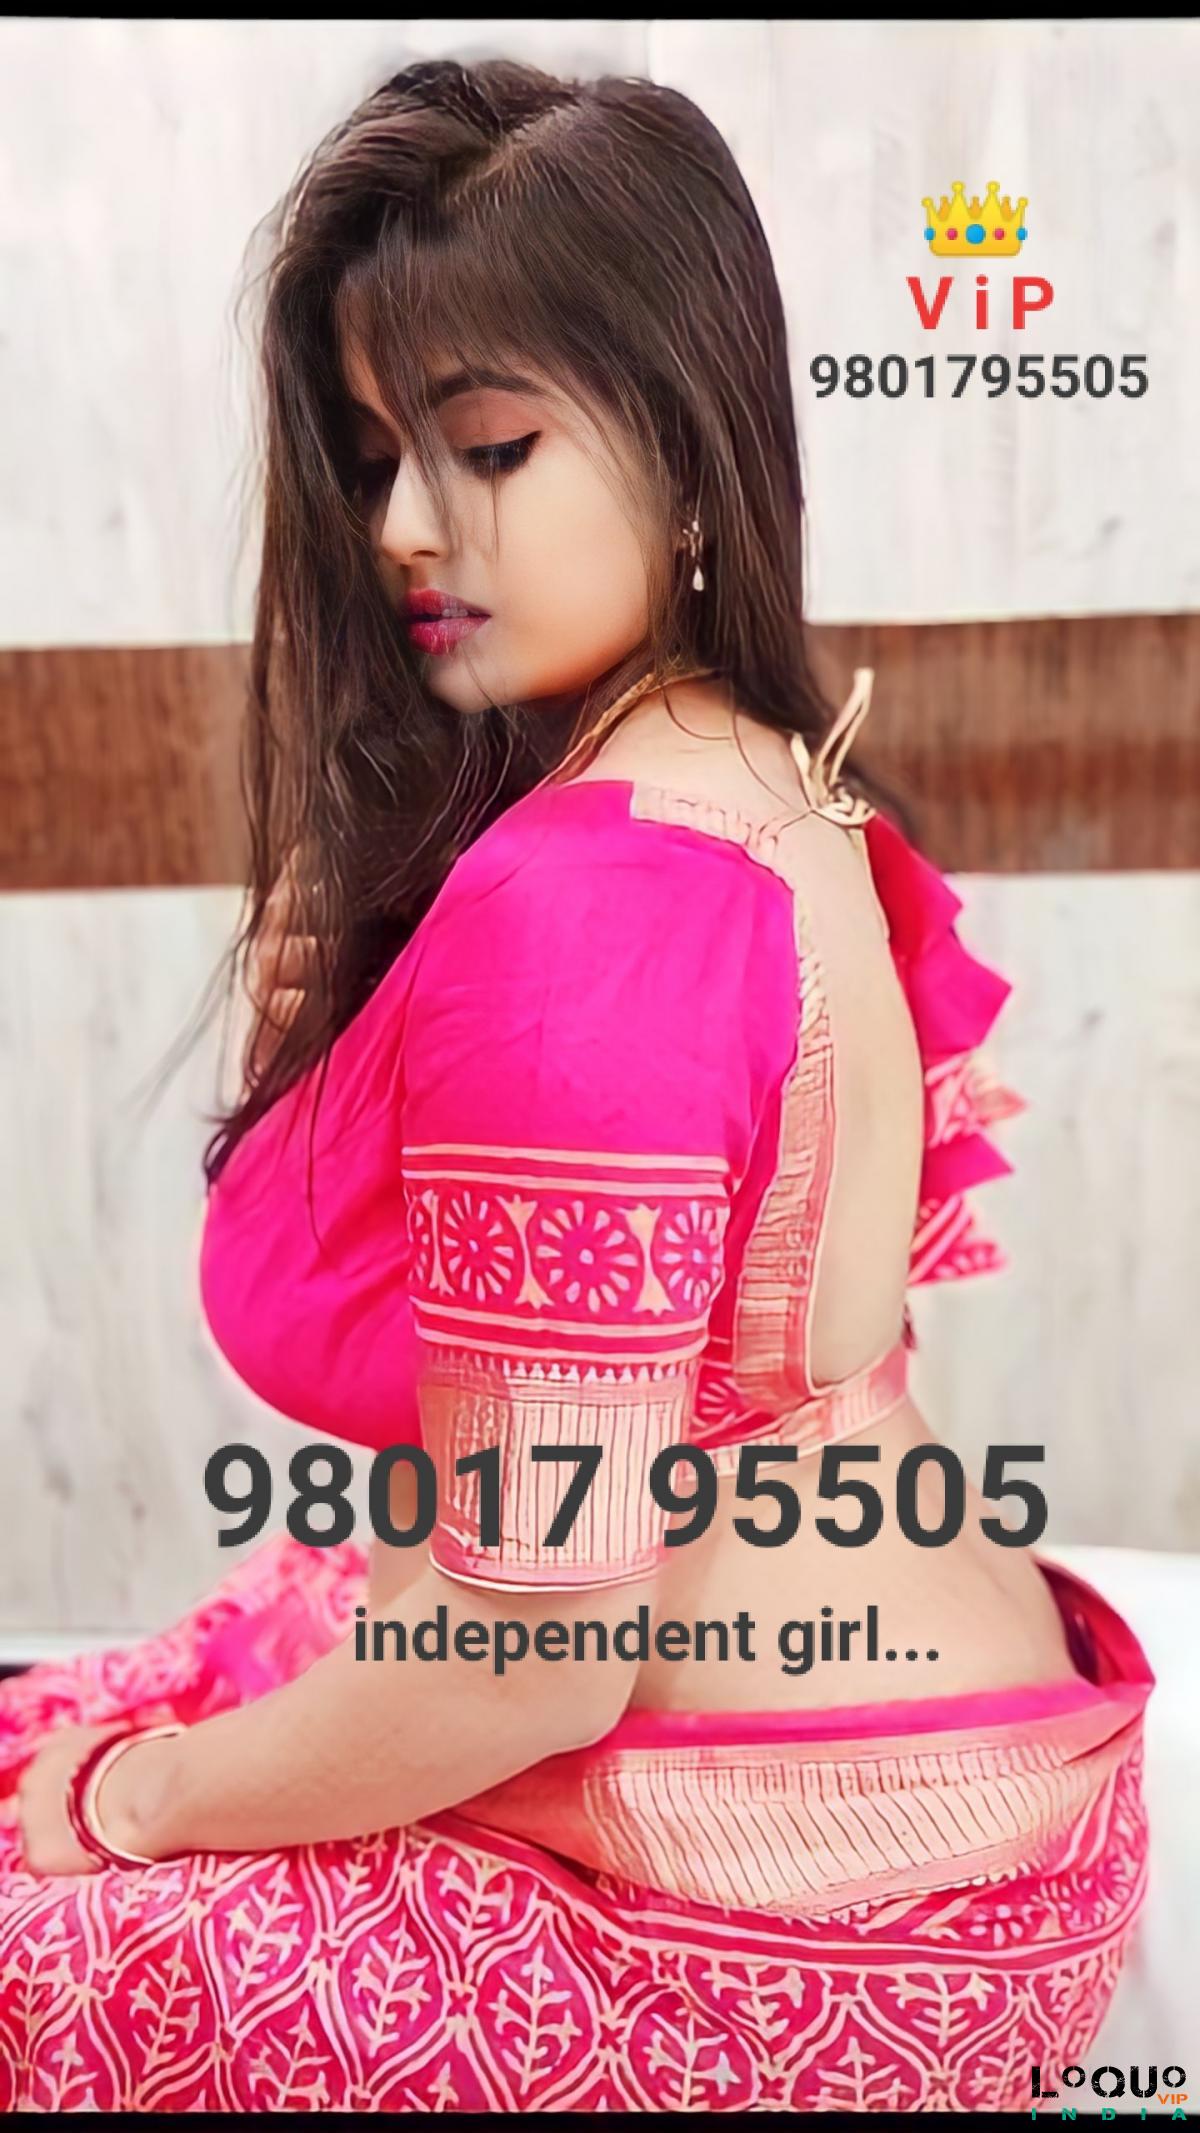 Call Girls Meghalaya: Shillong Callme * 98017/95505 * vip call girl services available